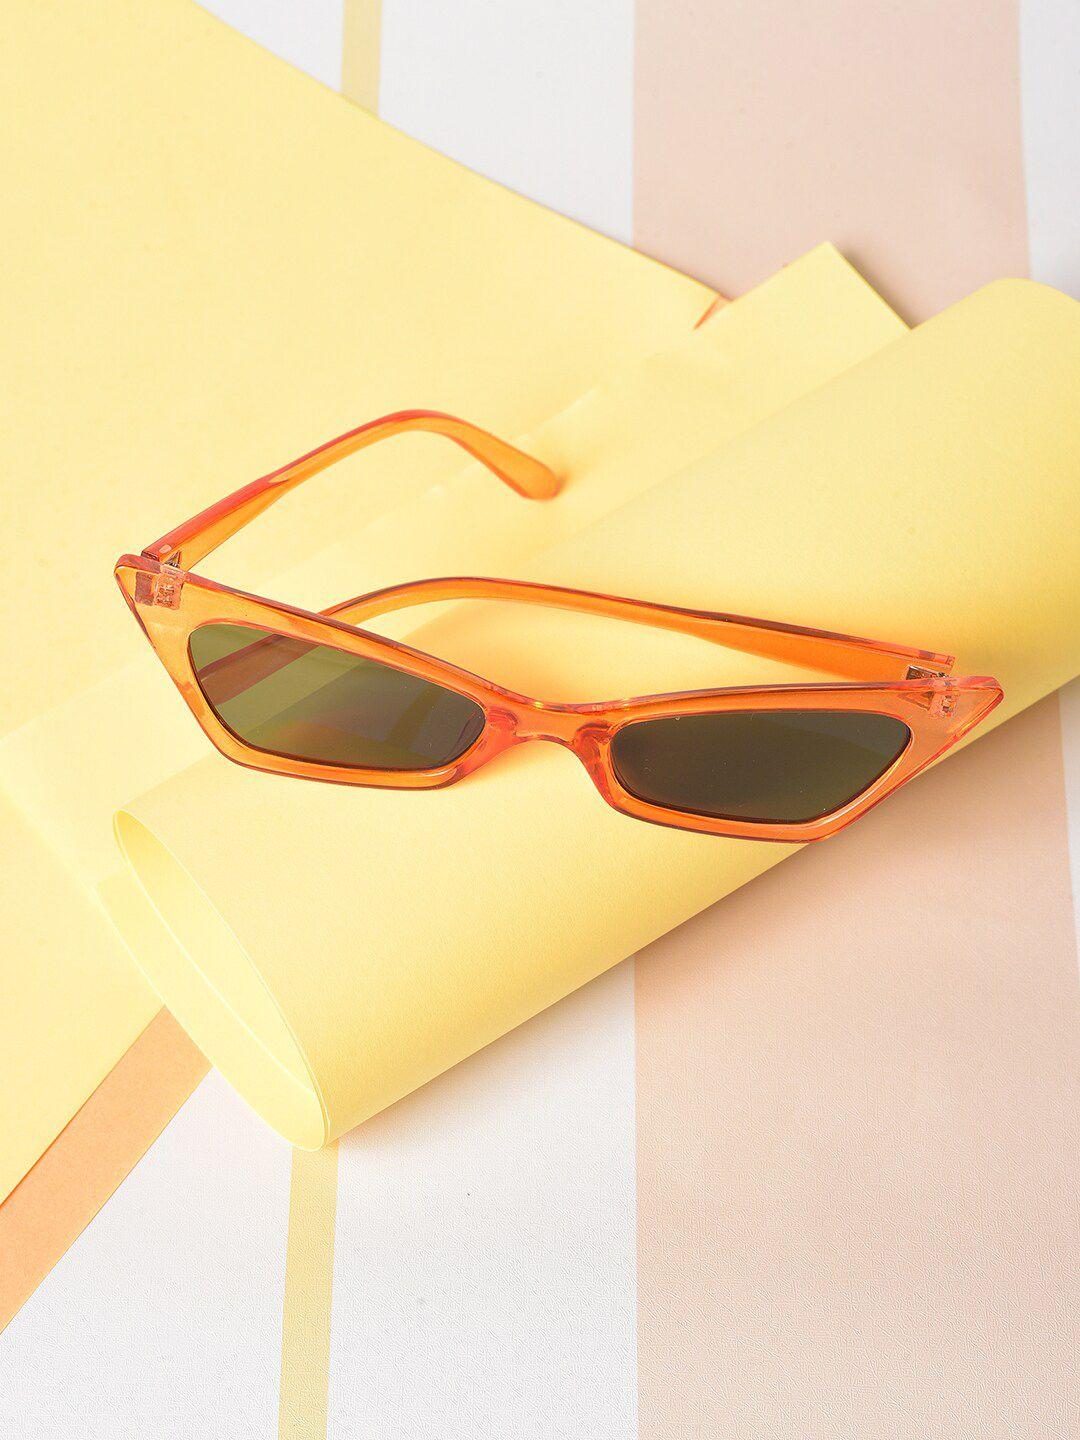 haute sauce by campus sutra women black lens & orange cateye sunglasses with polarised lens